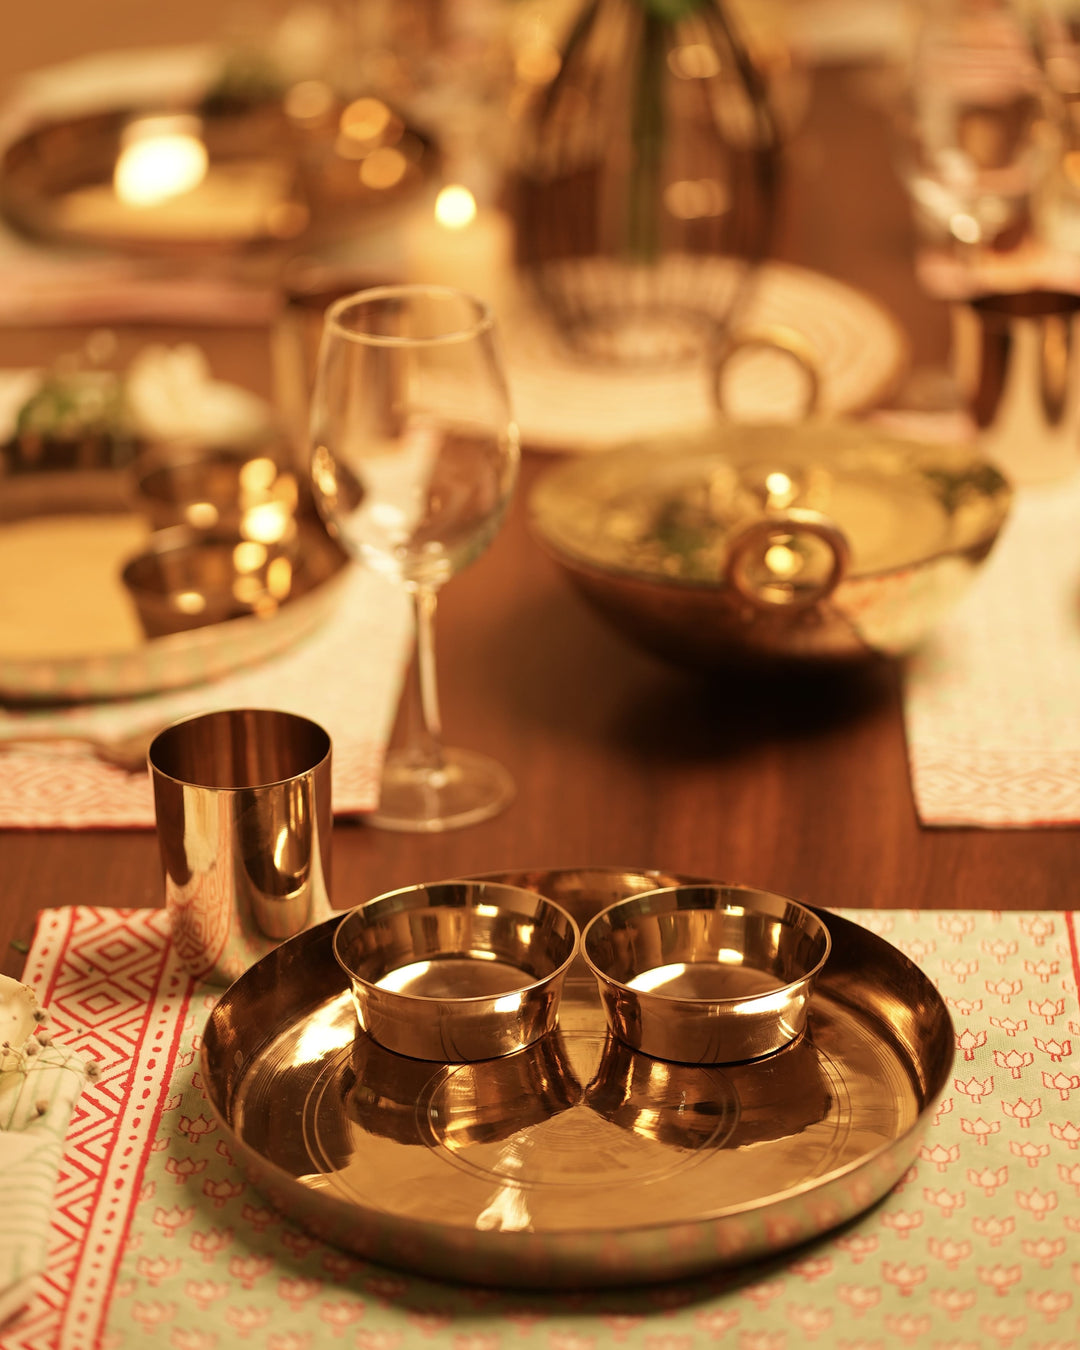 Kansa Dinner Thaali Set (11" Thaali) - 5 pieces (1 Thaali, 2 Bowls, 1 glass and 1 spoon)